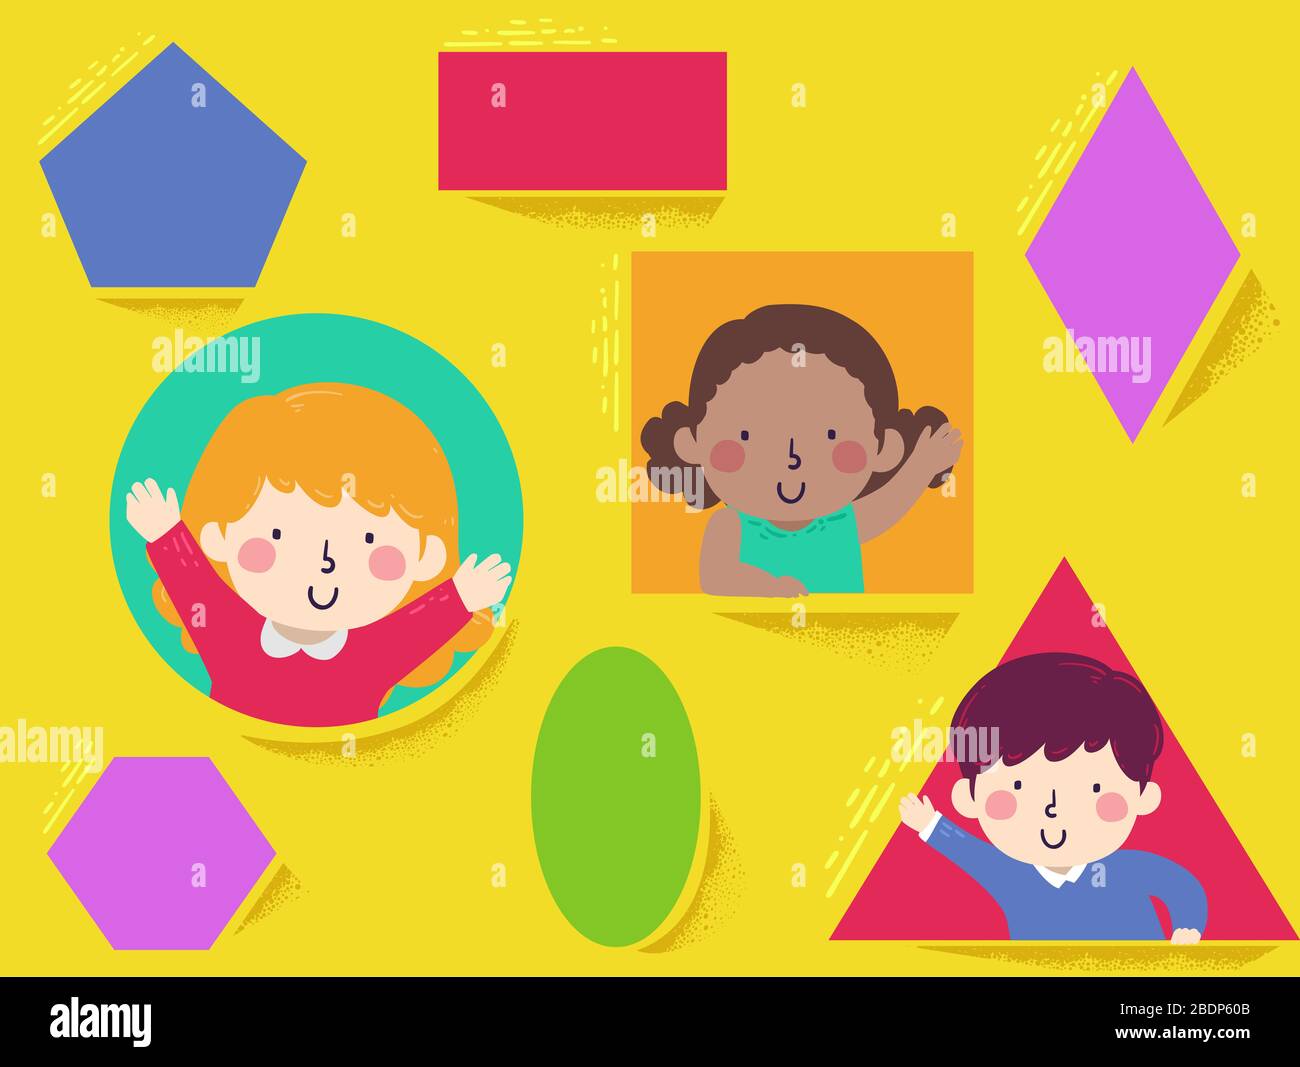 Illustration of Kids Waving from Inside Basic Geometry Shapes Stock Photo